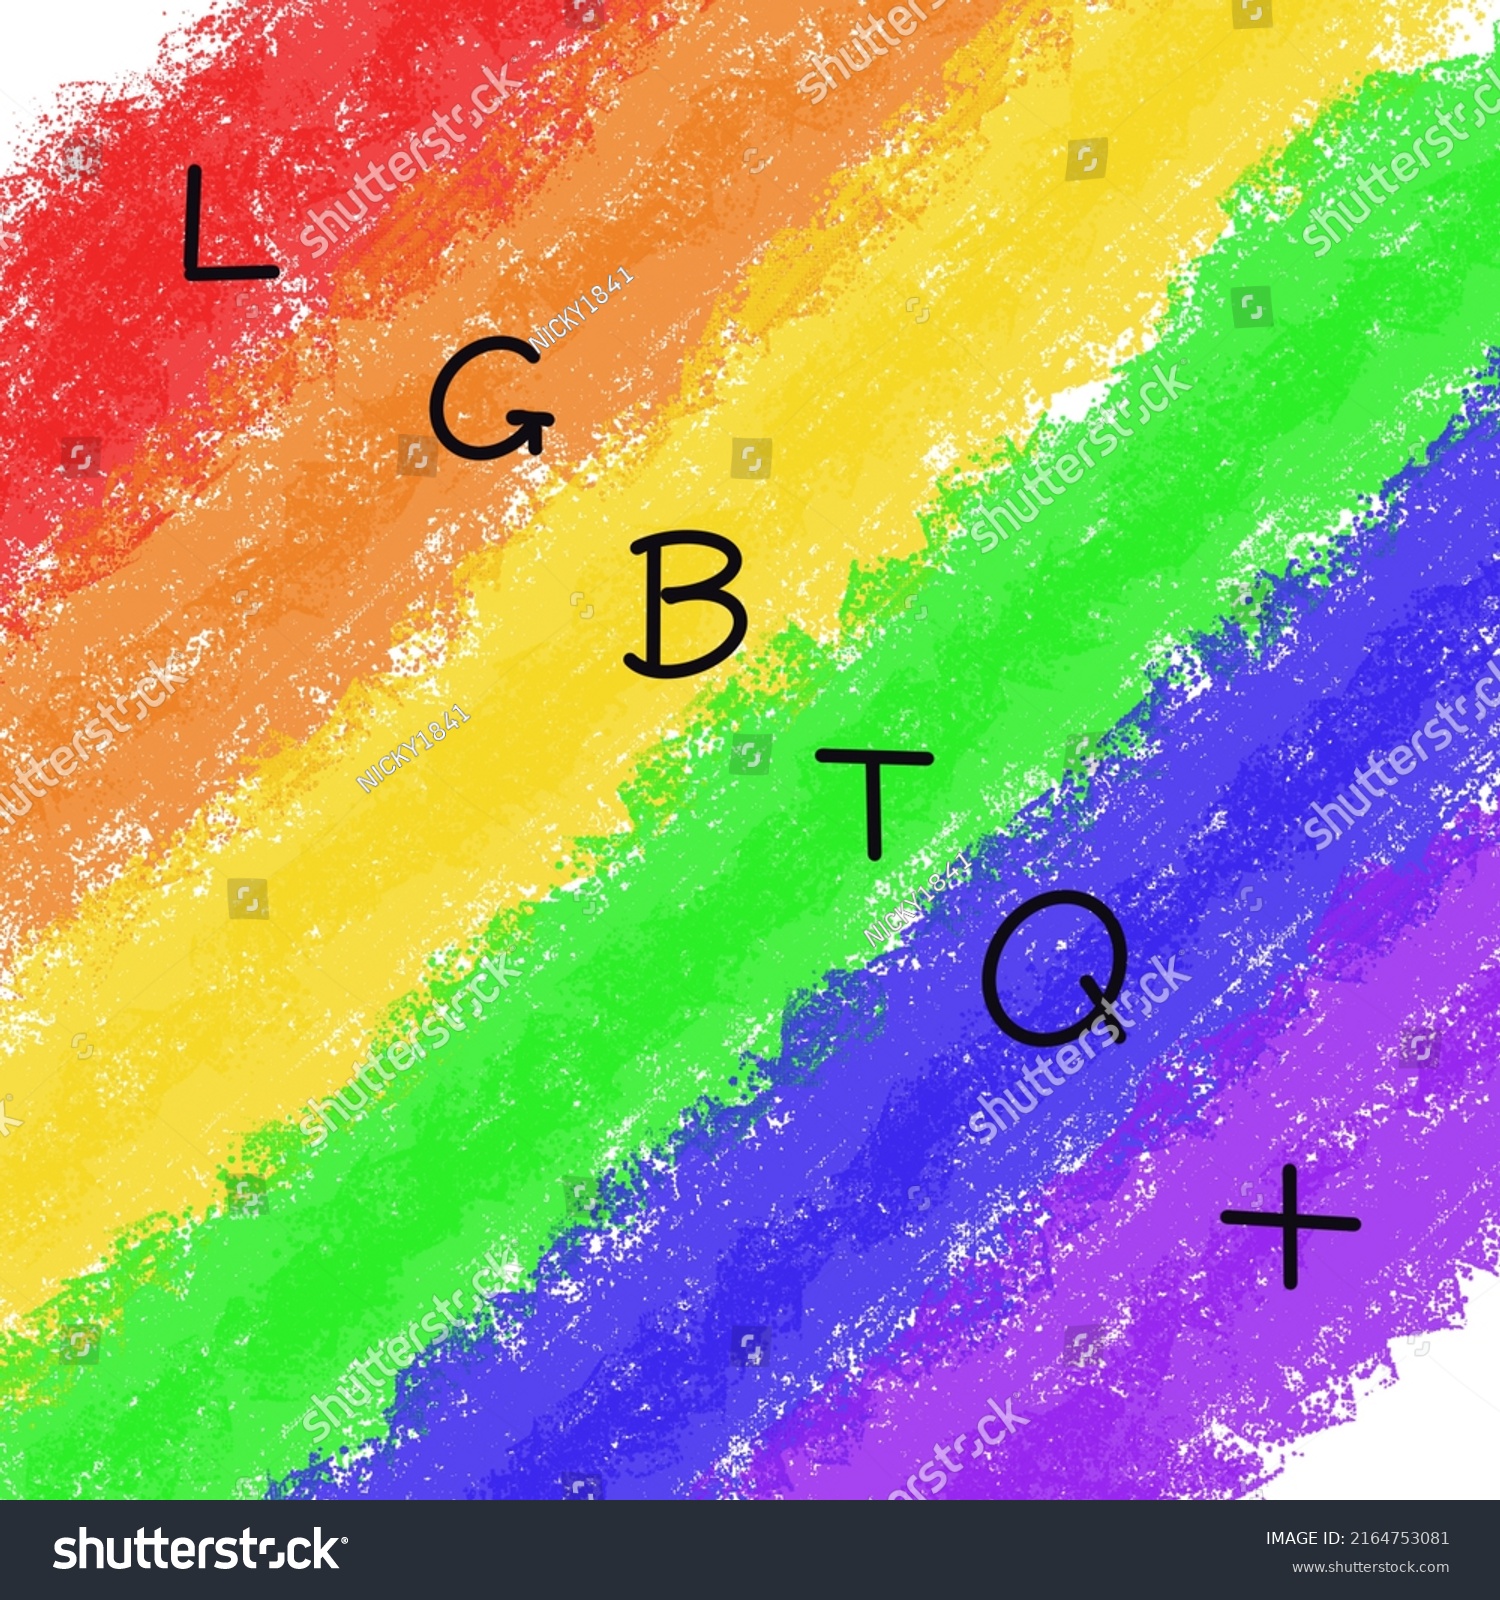 Lgbtq Gay Pride Icons Lgbtq Related Stock Illustration 2164753081 Shutterstock 